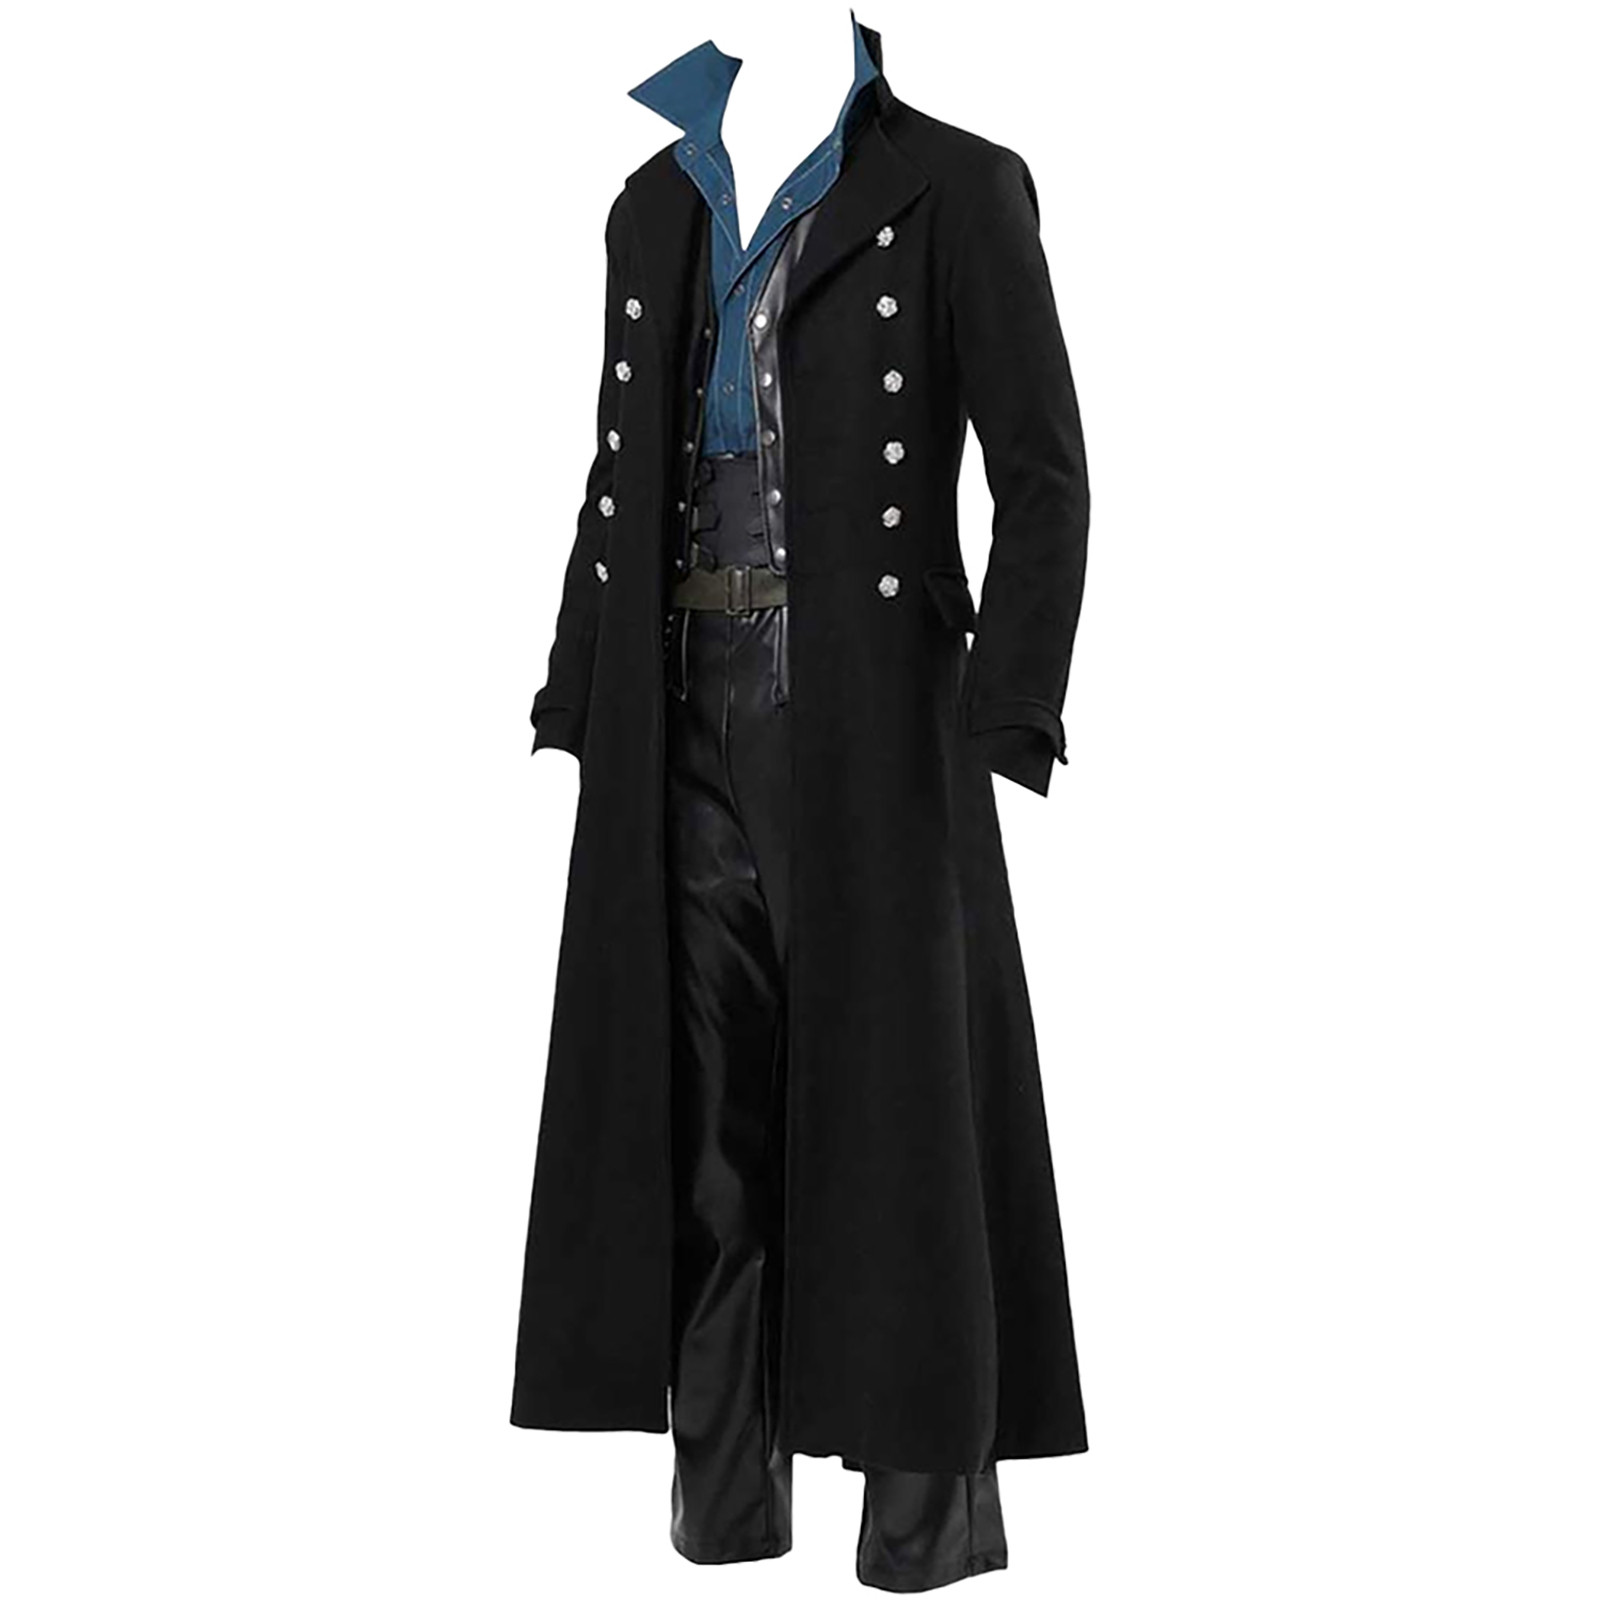 Munlar Black Jean Jacket for Men- Steampunk Gothic Costume Vintage Windbreaker Christmas Men Winter Coats Christmas Winter Coat Clearance - image 1 of 6